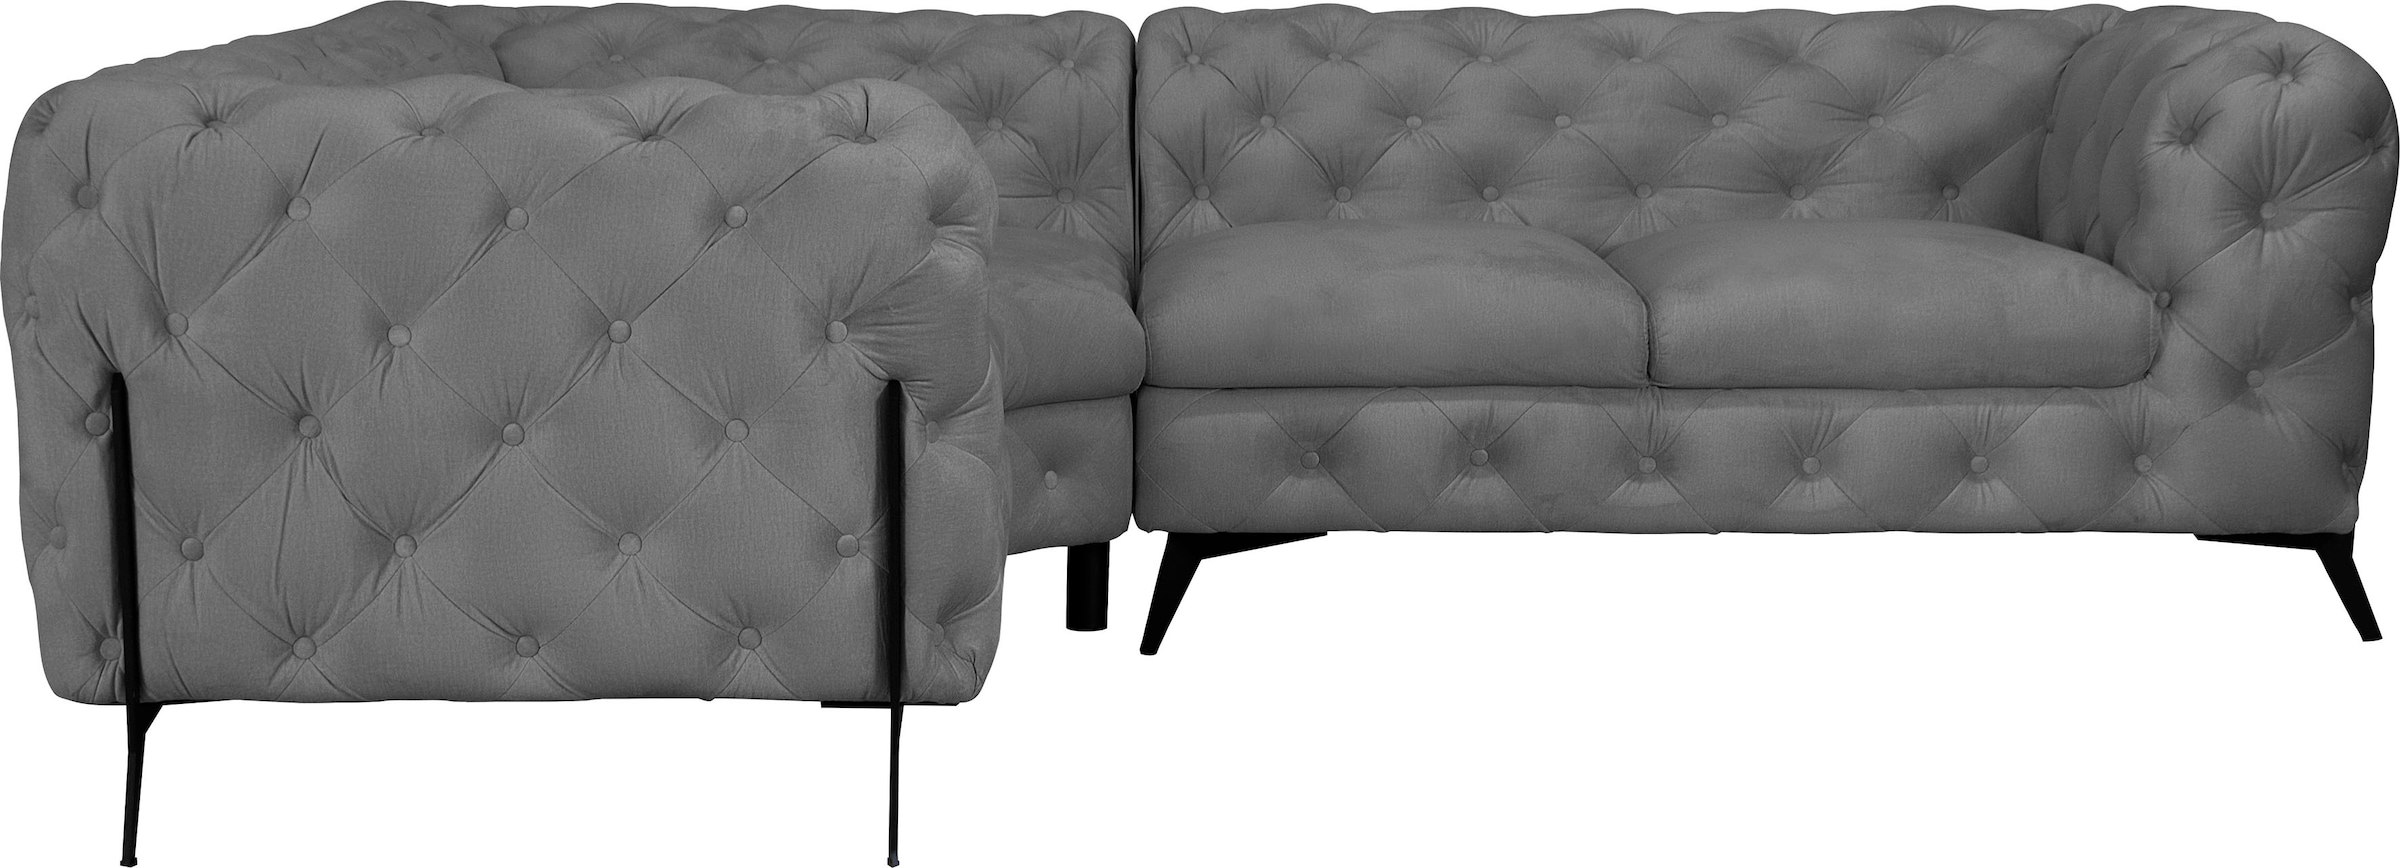 Chesterfield-Sofa »Amaury L-Form«, moderne Chersterfield-Optik, Breite 262 cm,...